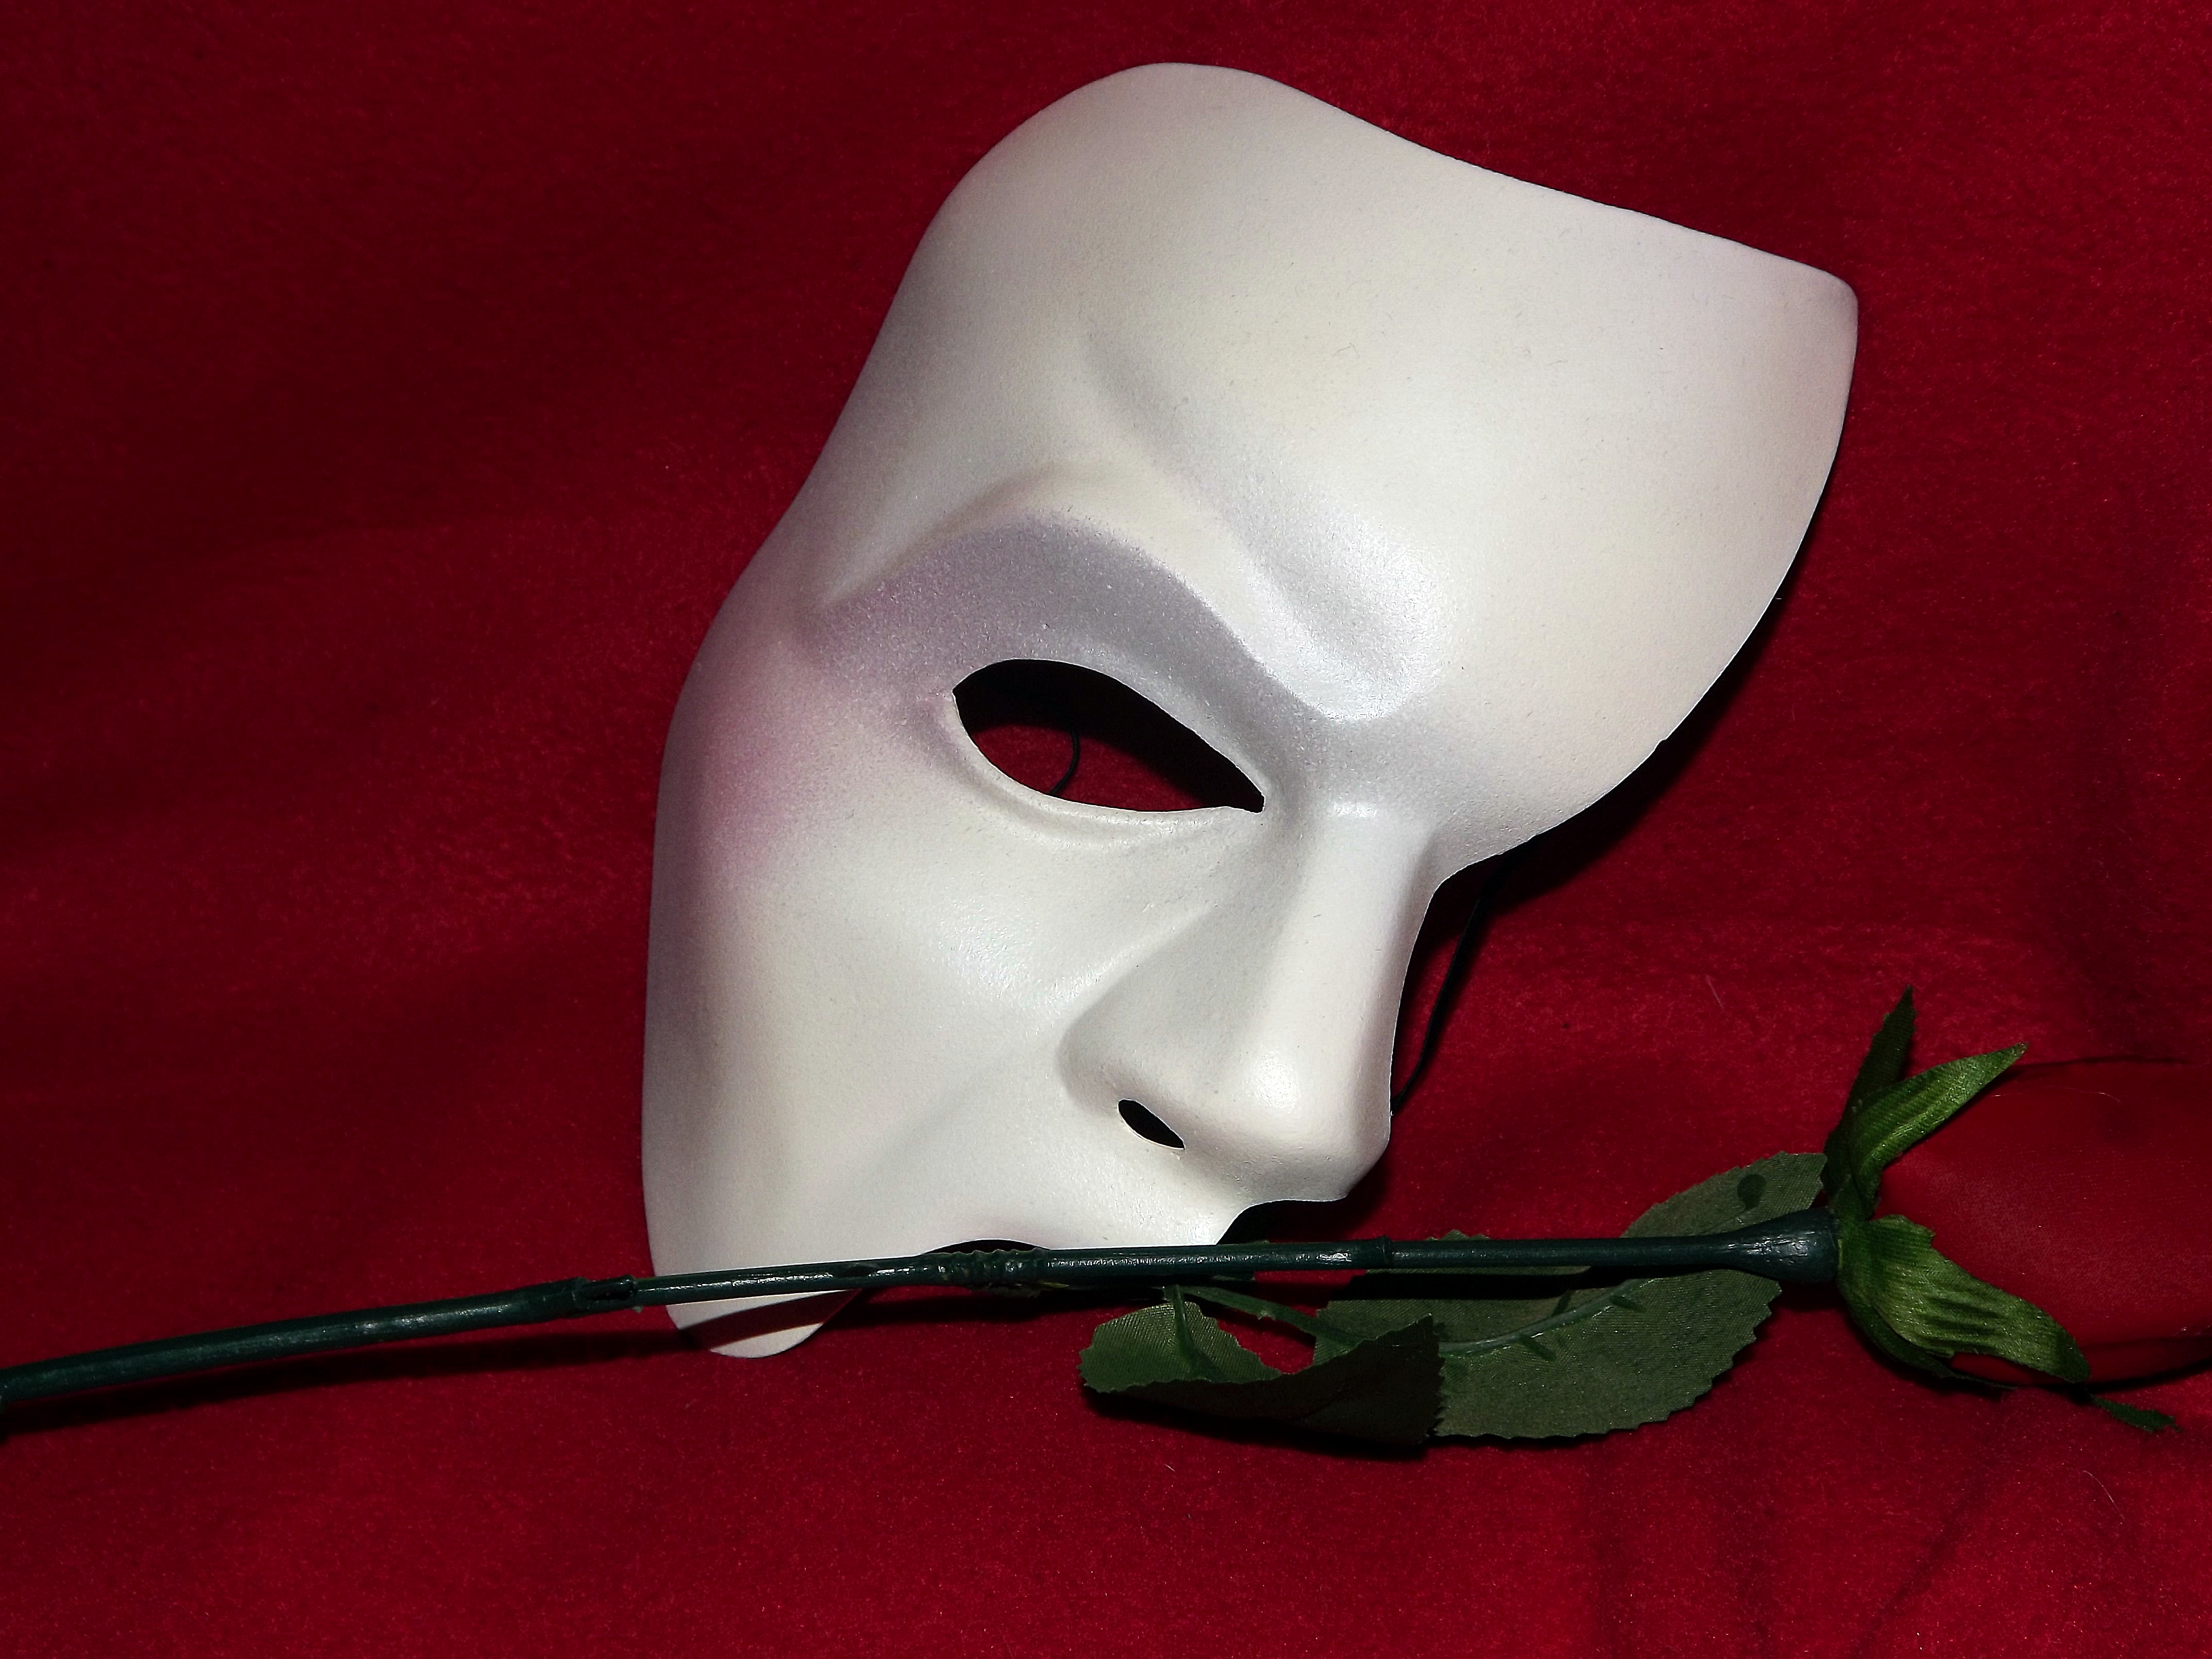 the phantom of the opera 2004 no mask